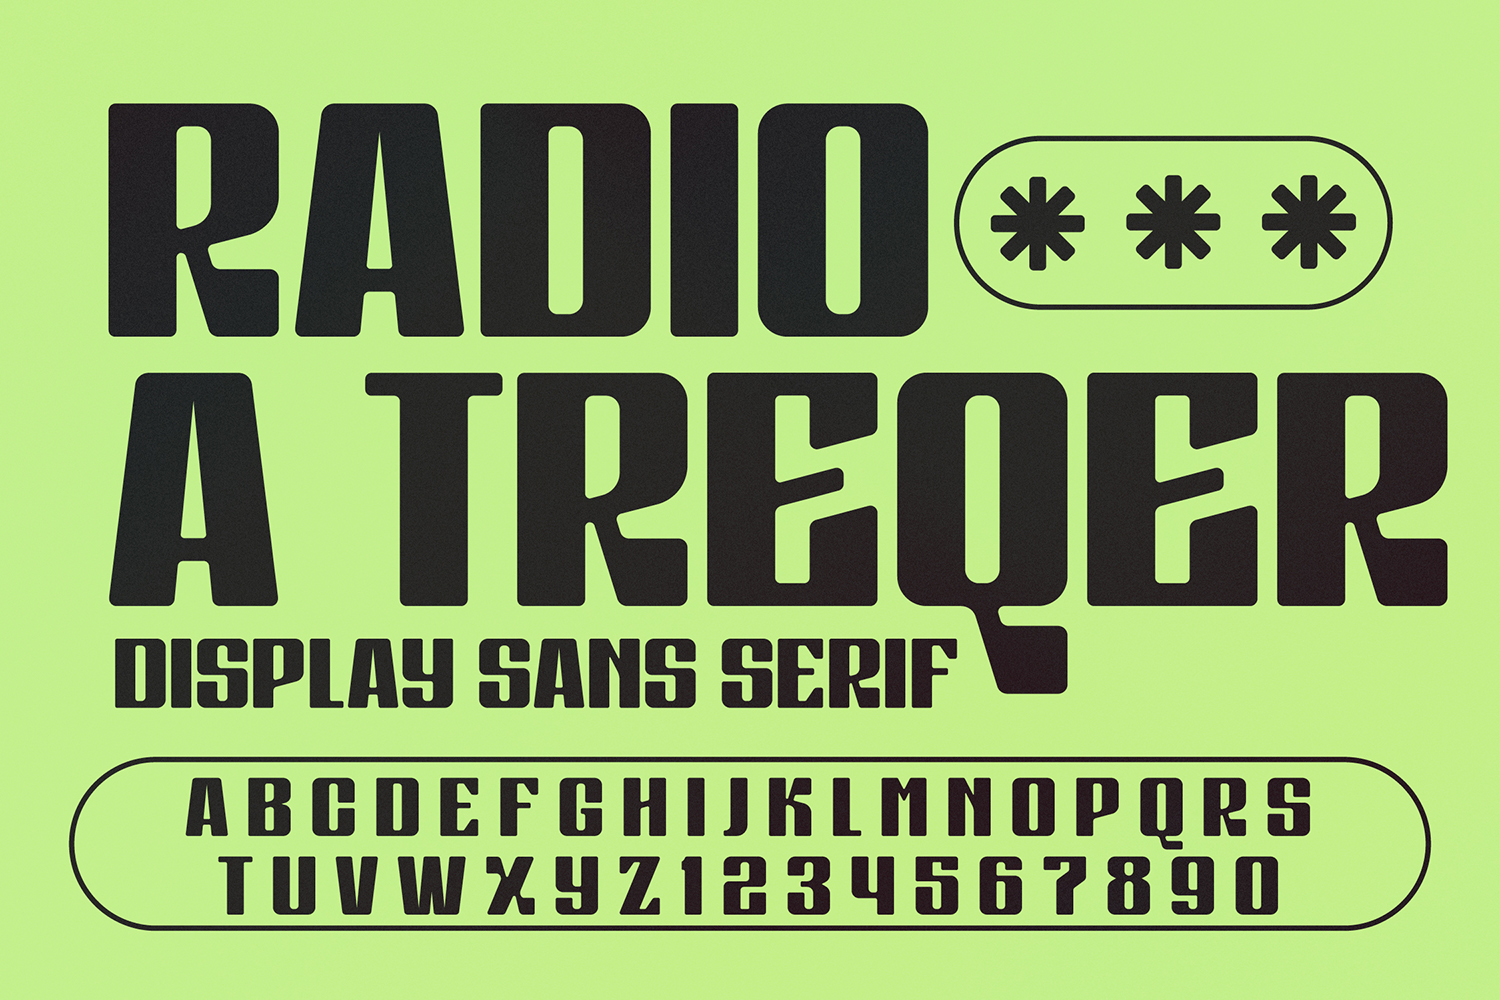 Radio a Treqer Free Font